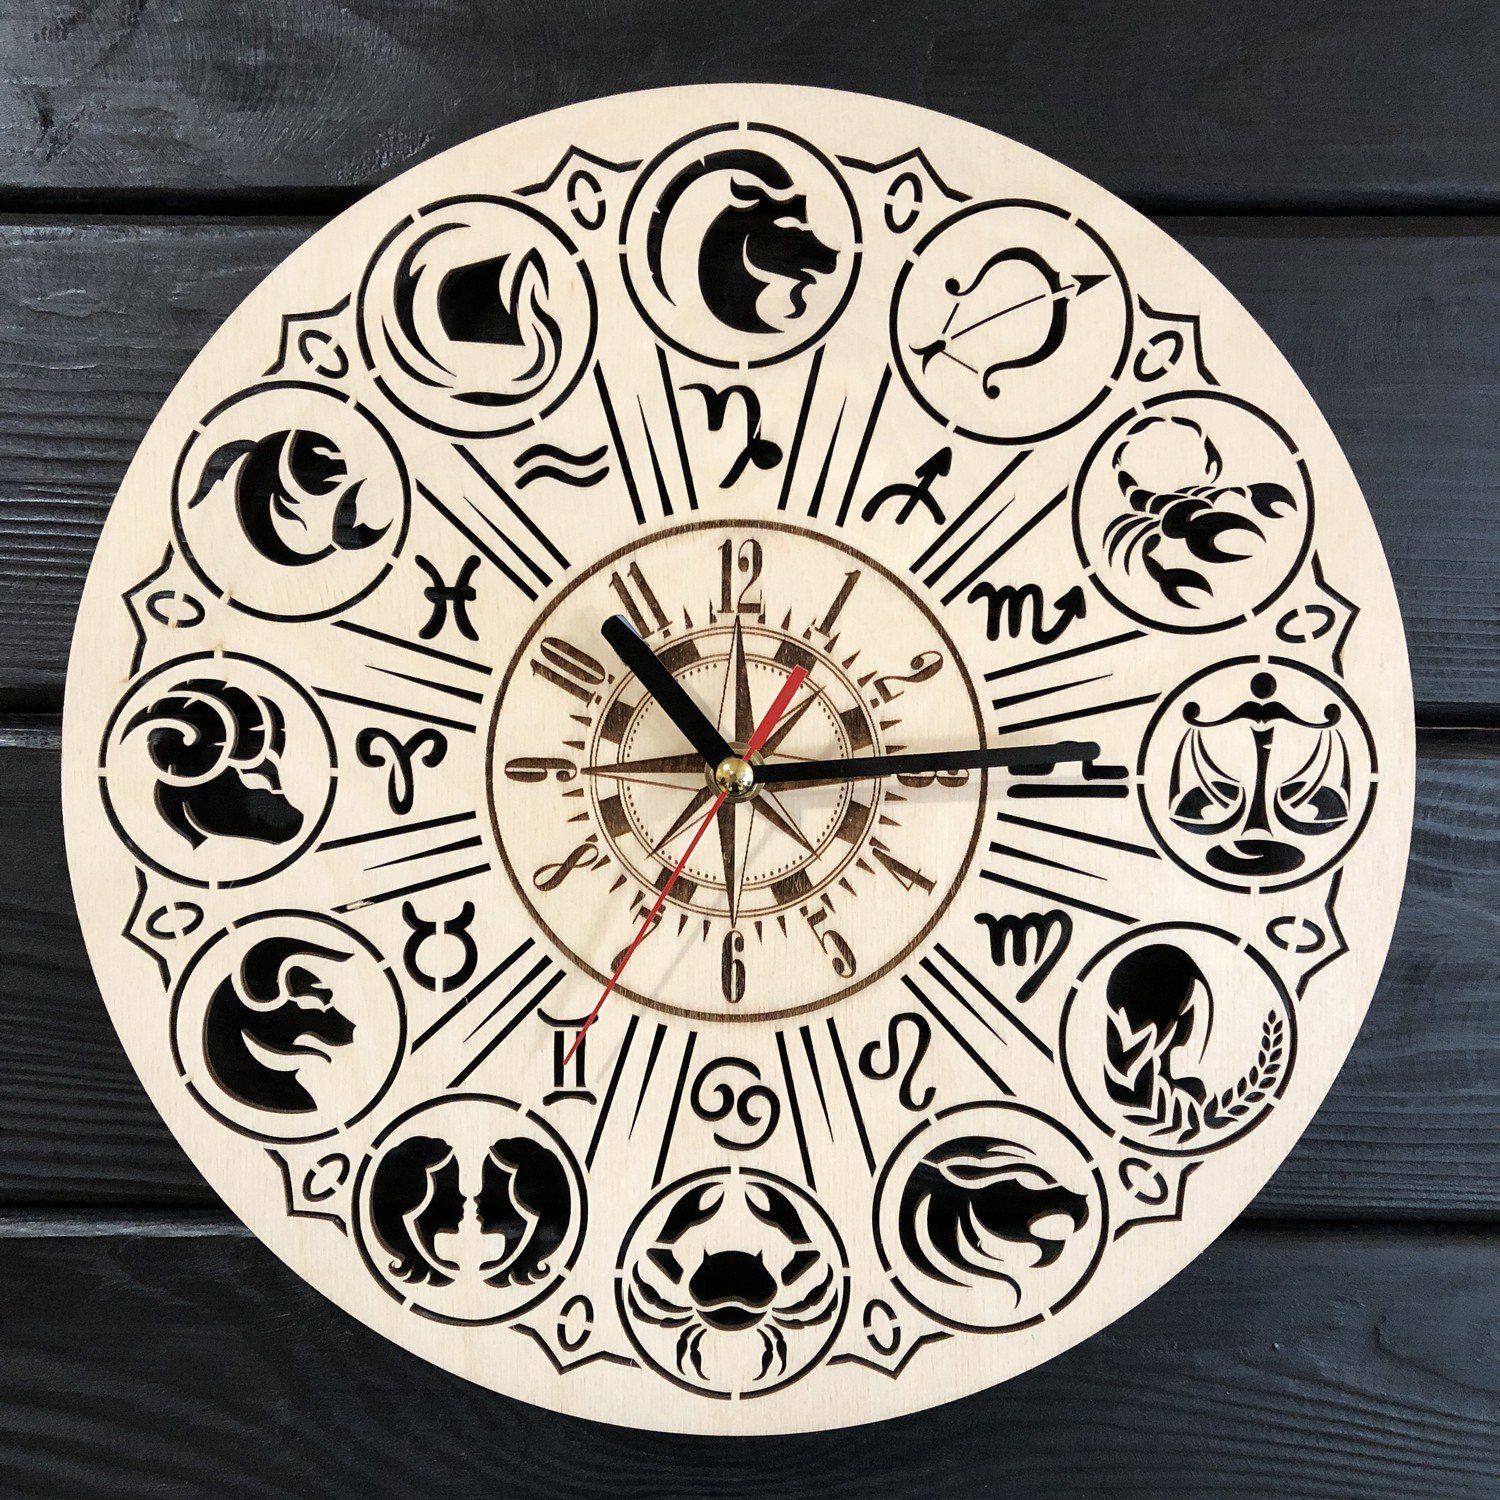 Часы зодиак. Настенные часы "знаки зодиака". Часы настенные Зодиак. Часы настенные со знаками зодиака на циферблате. Часы со знаками зодиака на циферблате.